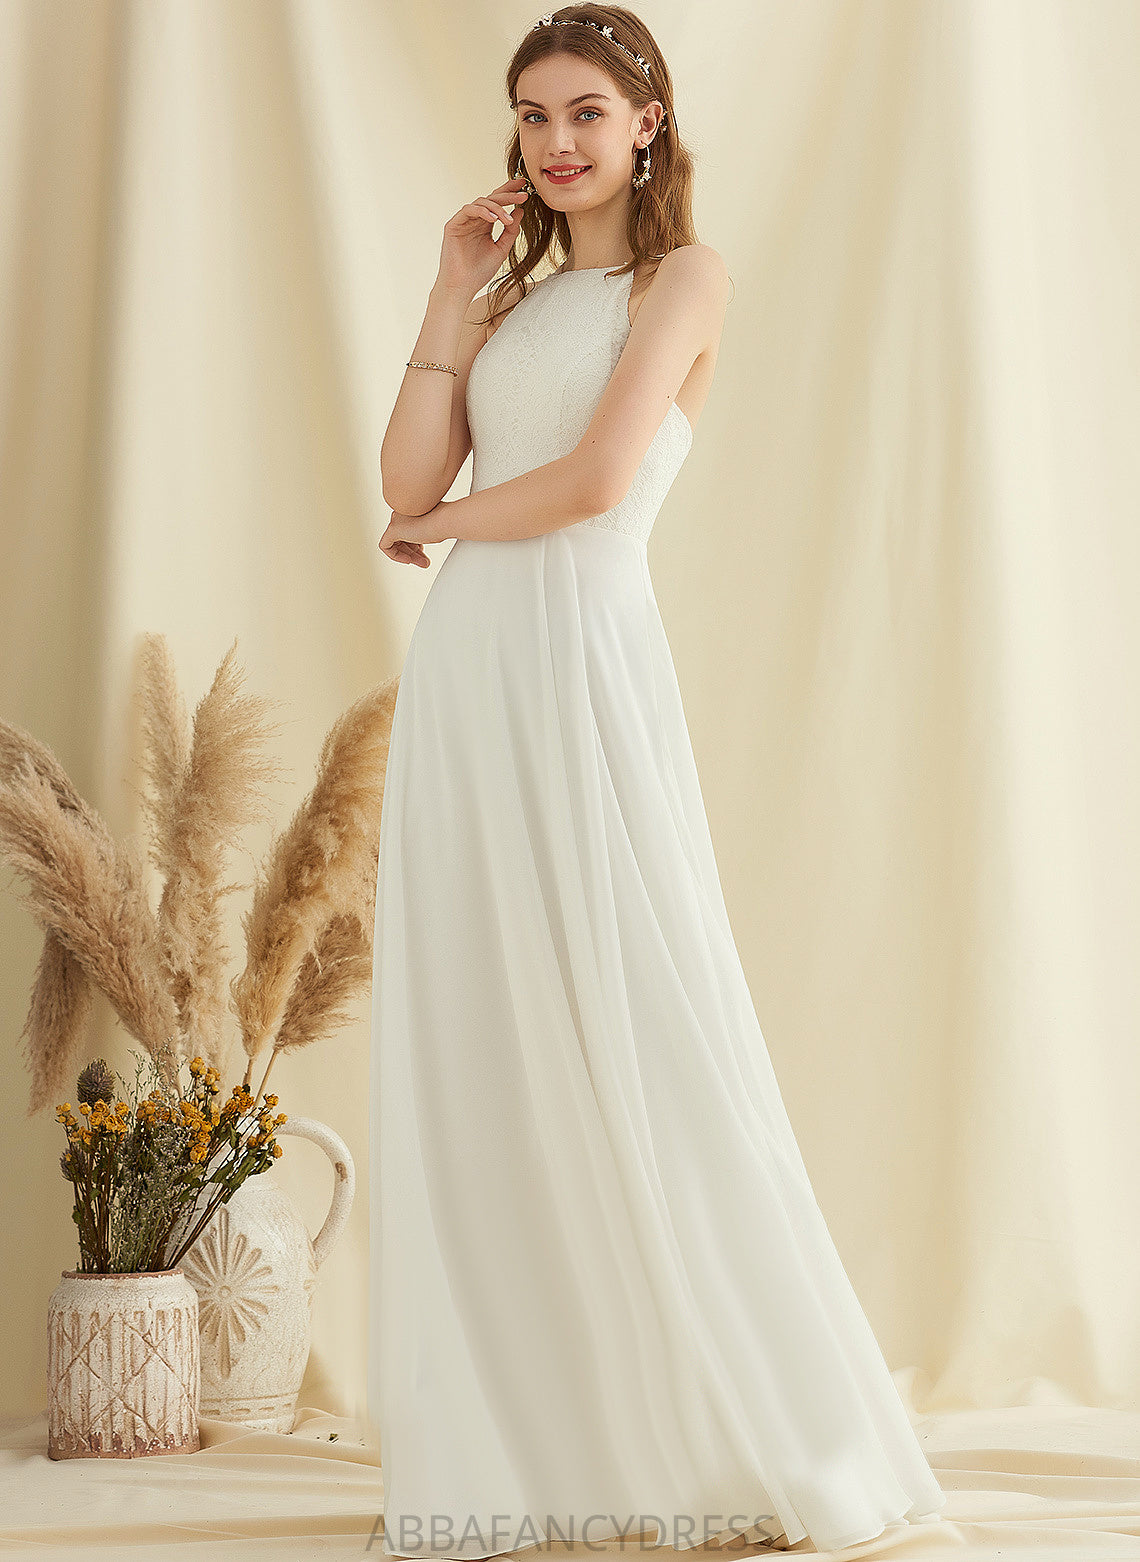 Dress Chiffon Lace Wedding Dresses Floor-Length Wedding A-Line Norma